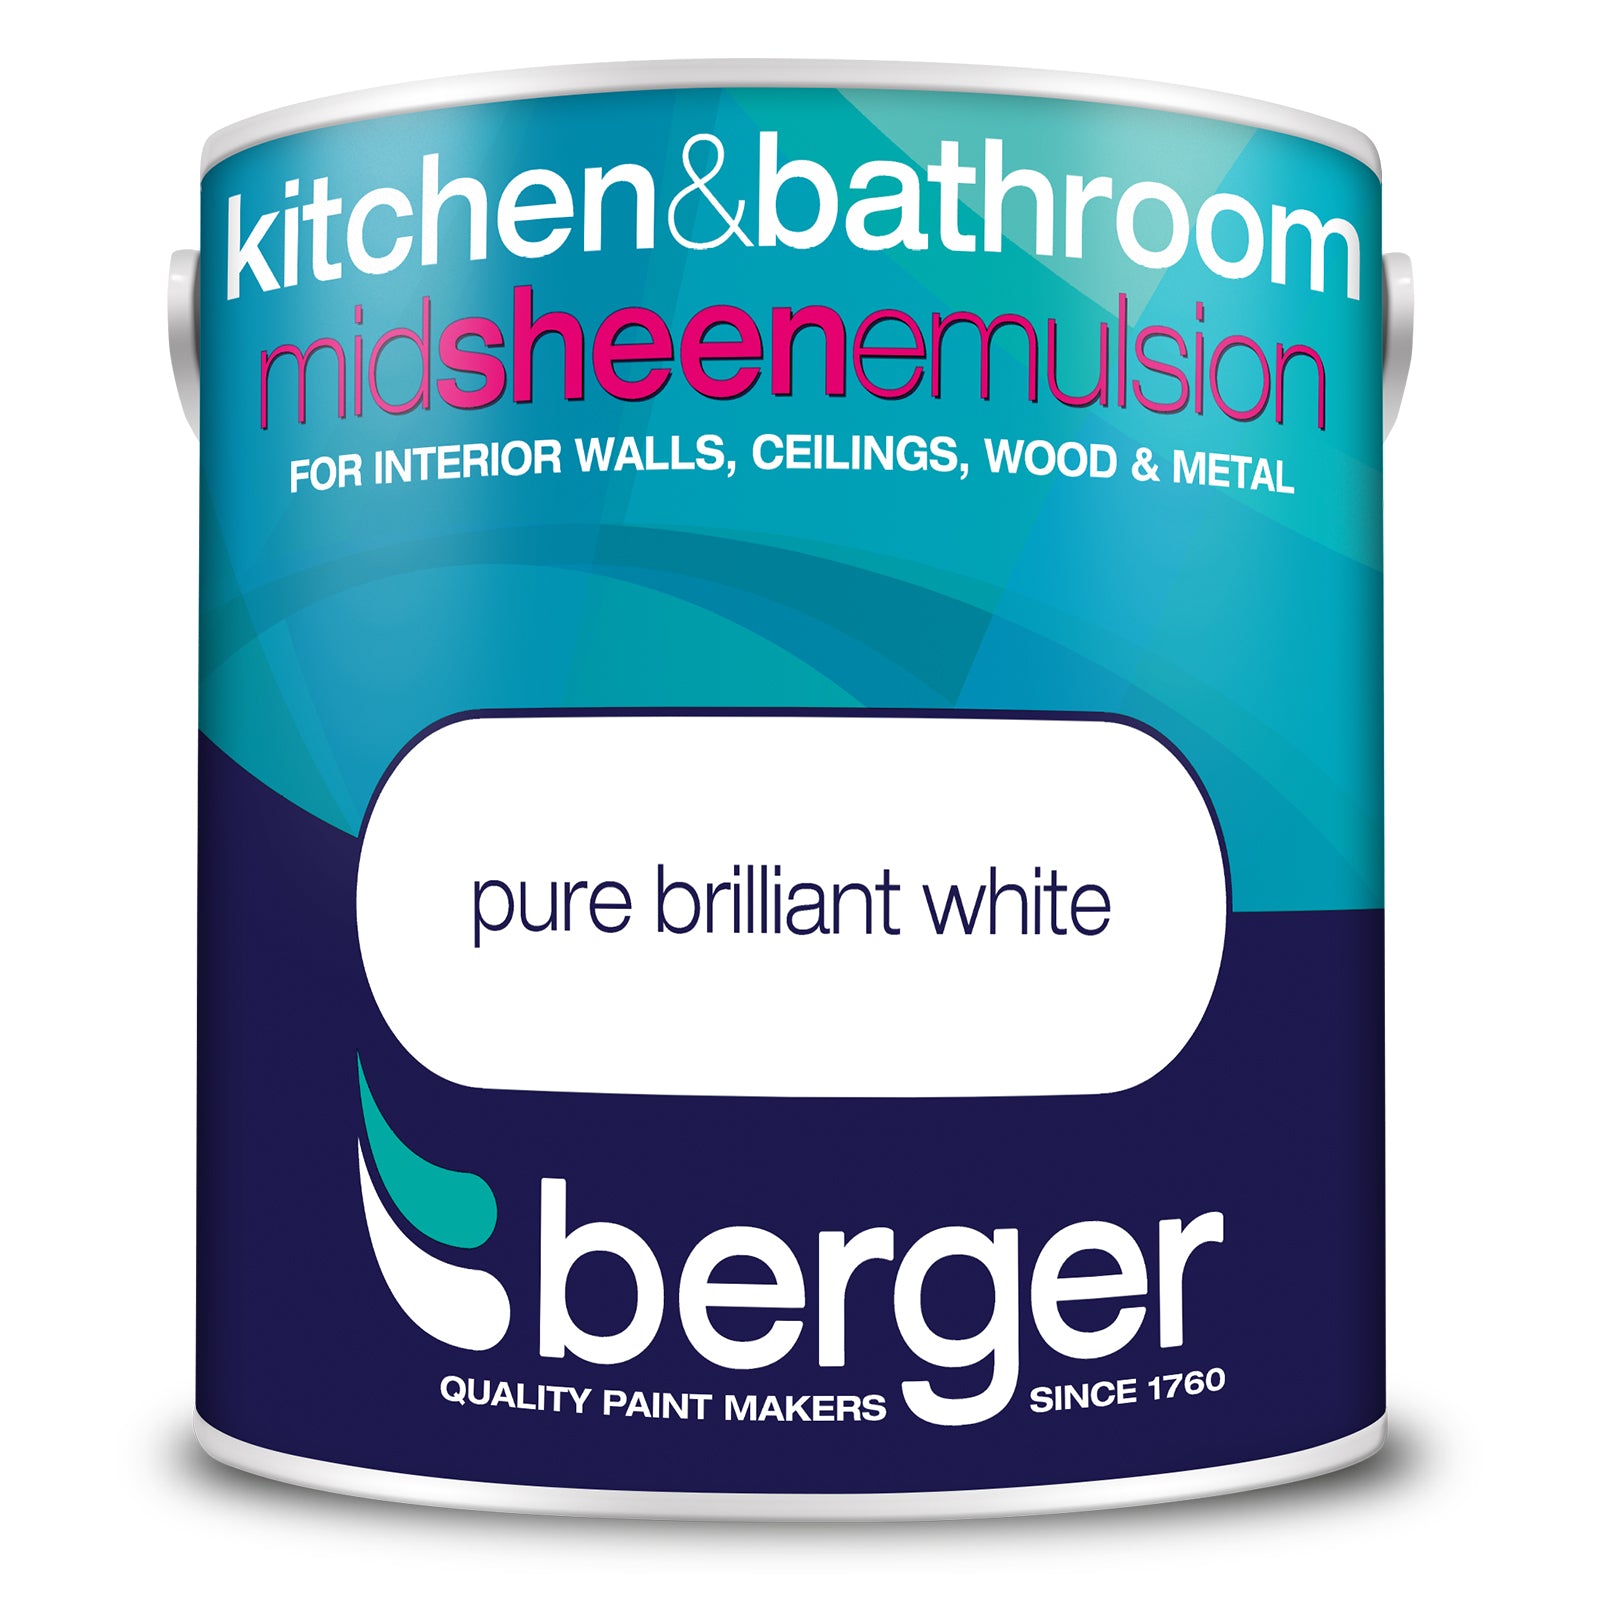 Berger Kitchen & Bathroom Mid Sheen Pure Brilliant White 2.5L